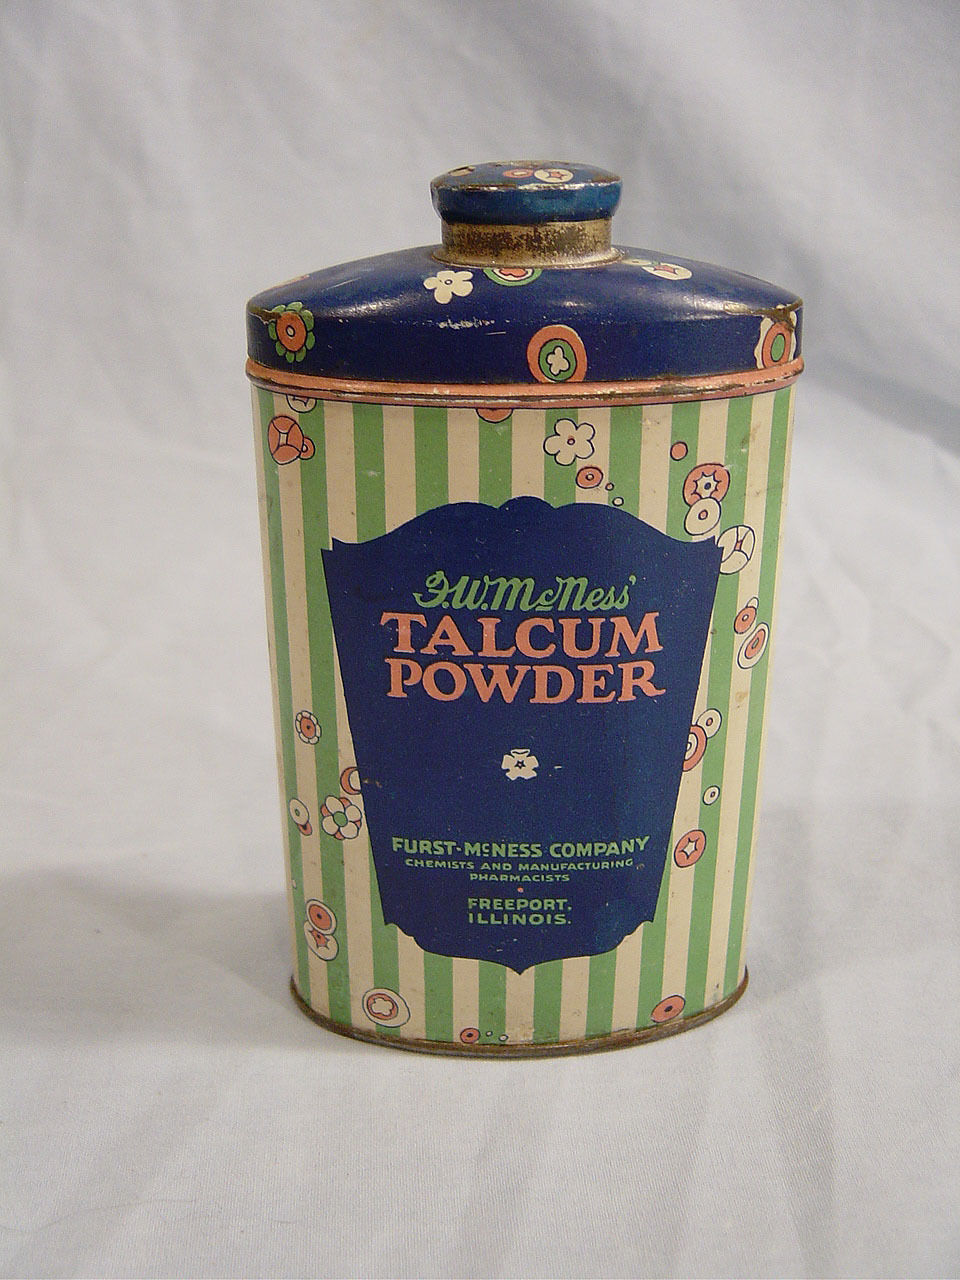 F. W. McNess' Talcum Powder Tin  by Furst - McNess Co. of Freepoort Illinois F. W. McNess